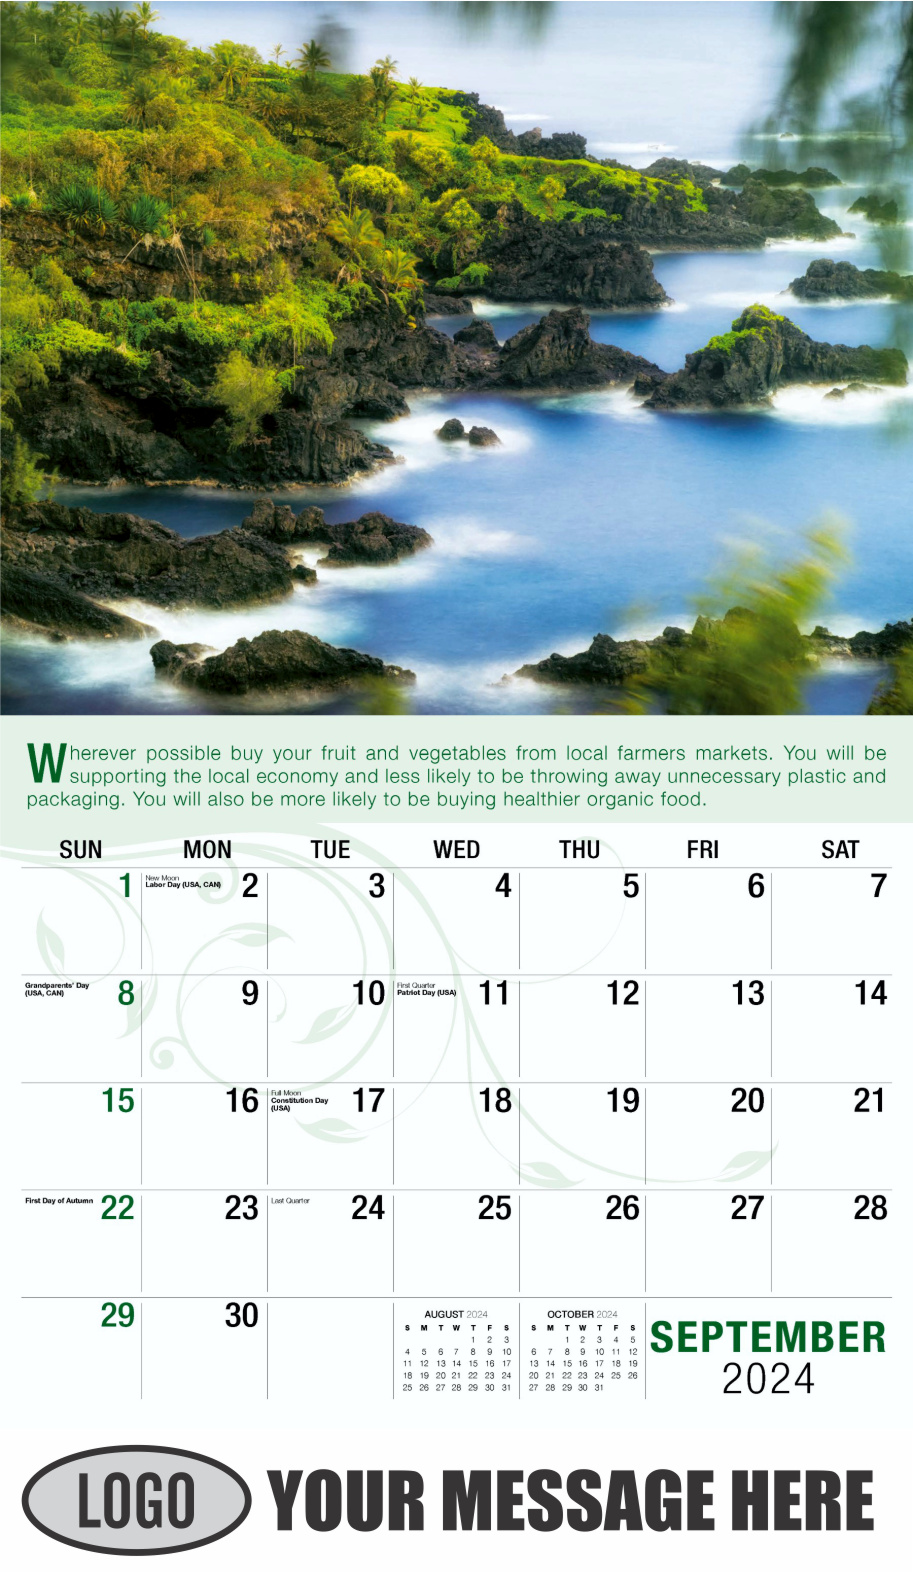 Go Green 2024 Business Promotion Calendar - September